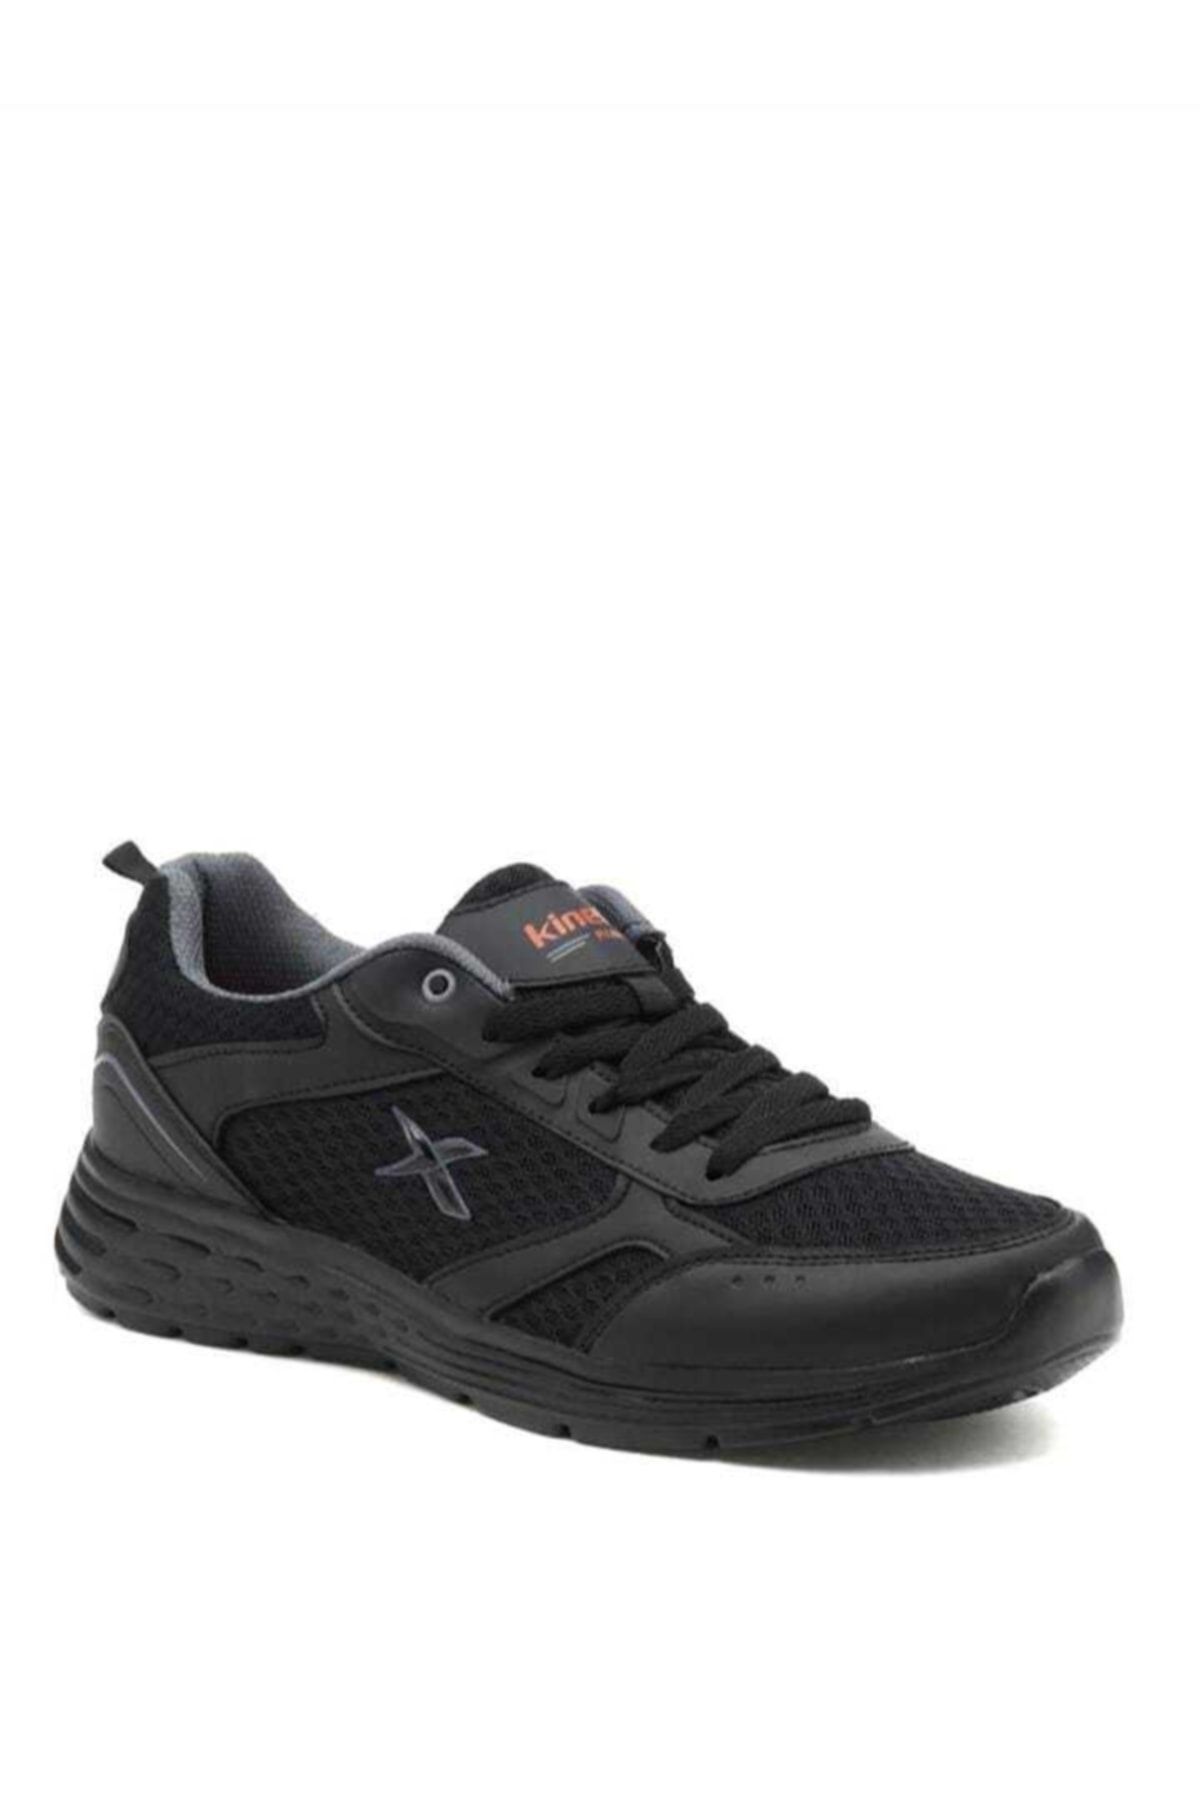 Kinetix Apex Tx 2fx Siyah Spor Ayakkabı